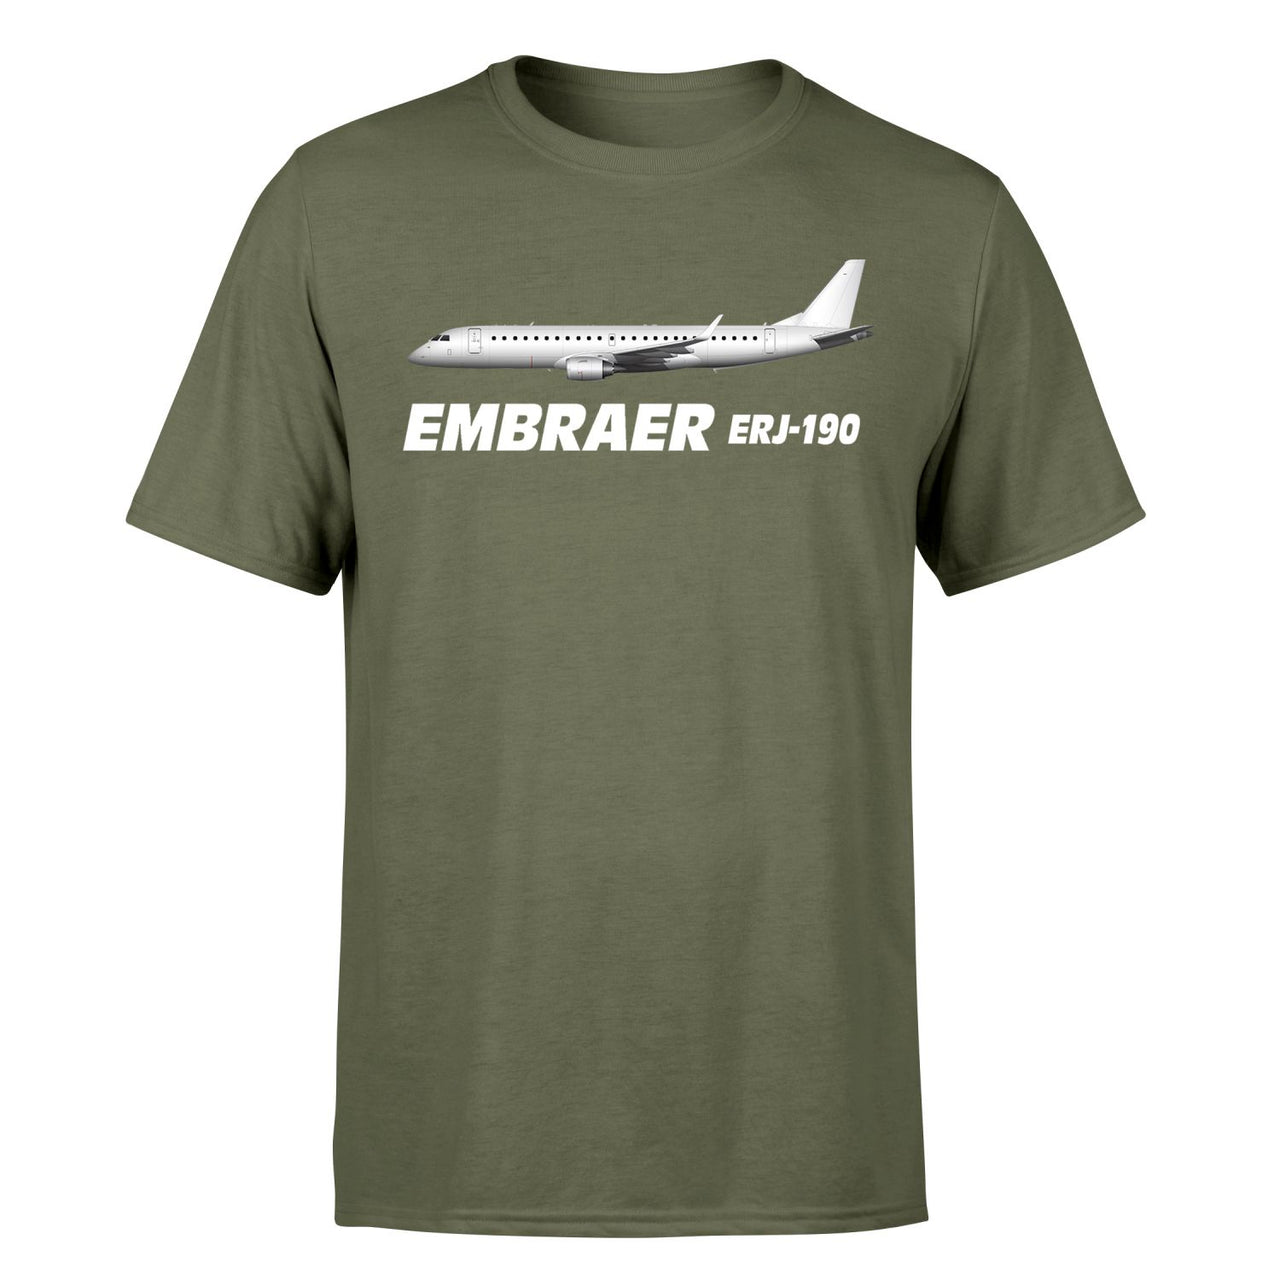 The Embraer ERJ-190 Designed T-Shirts